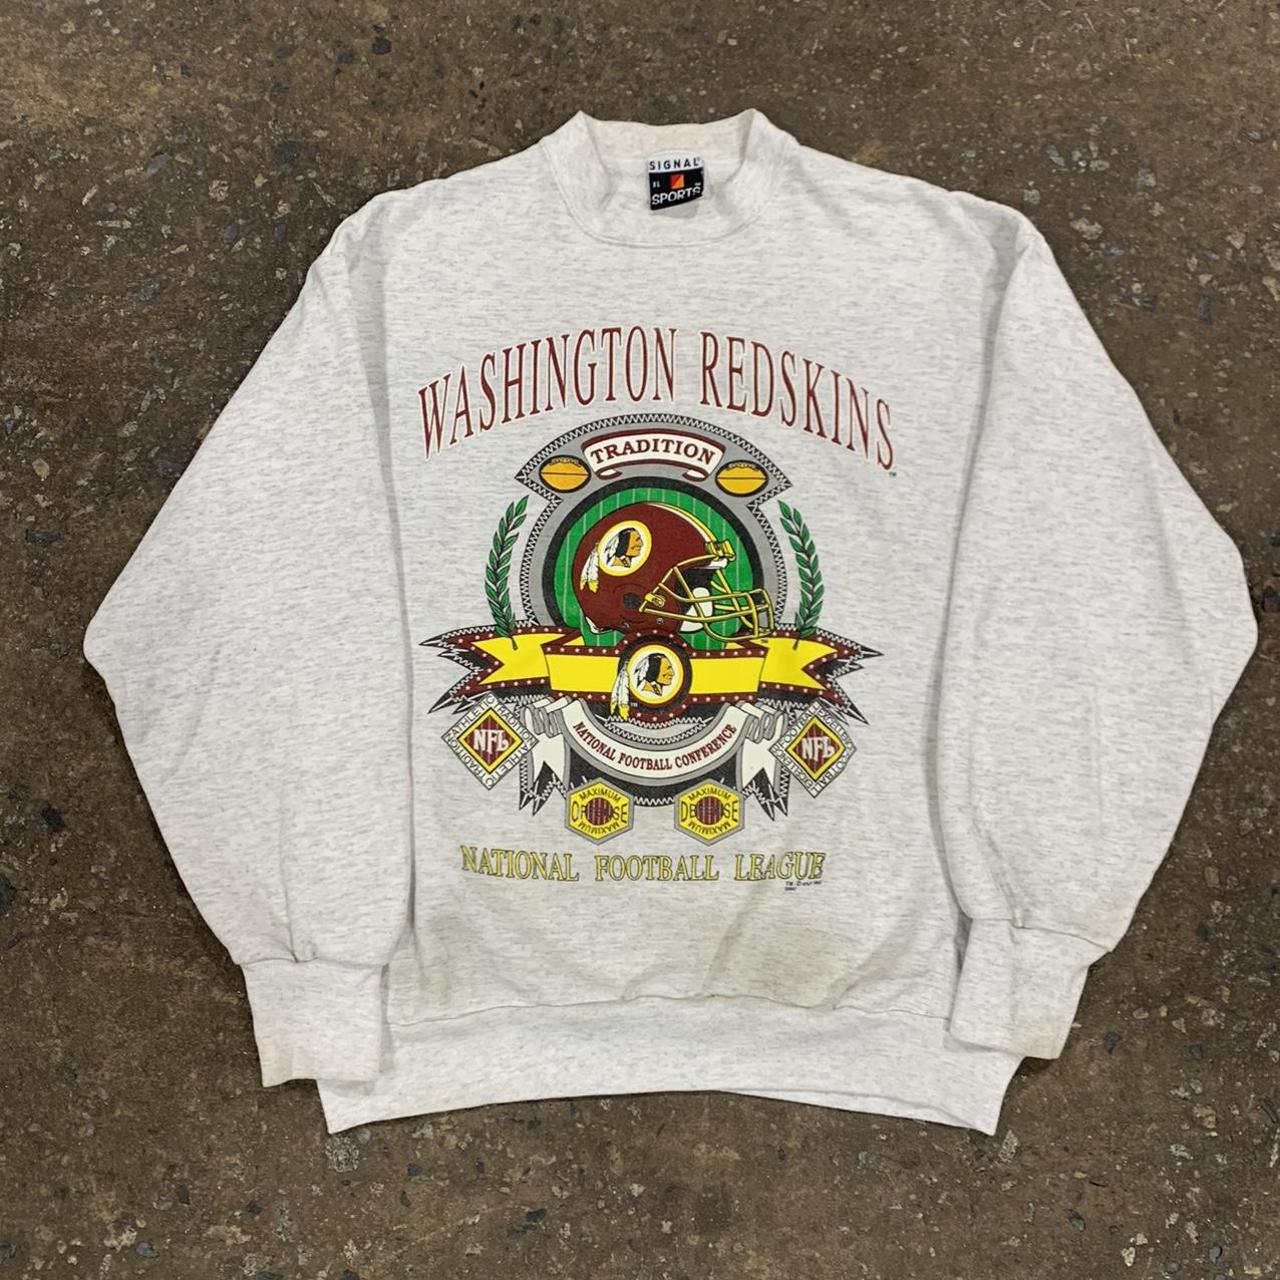 American Vintage Men's Sweatshirt